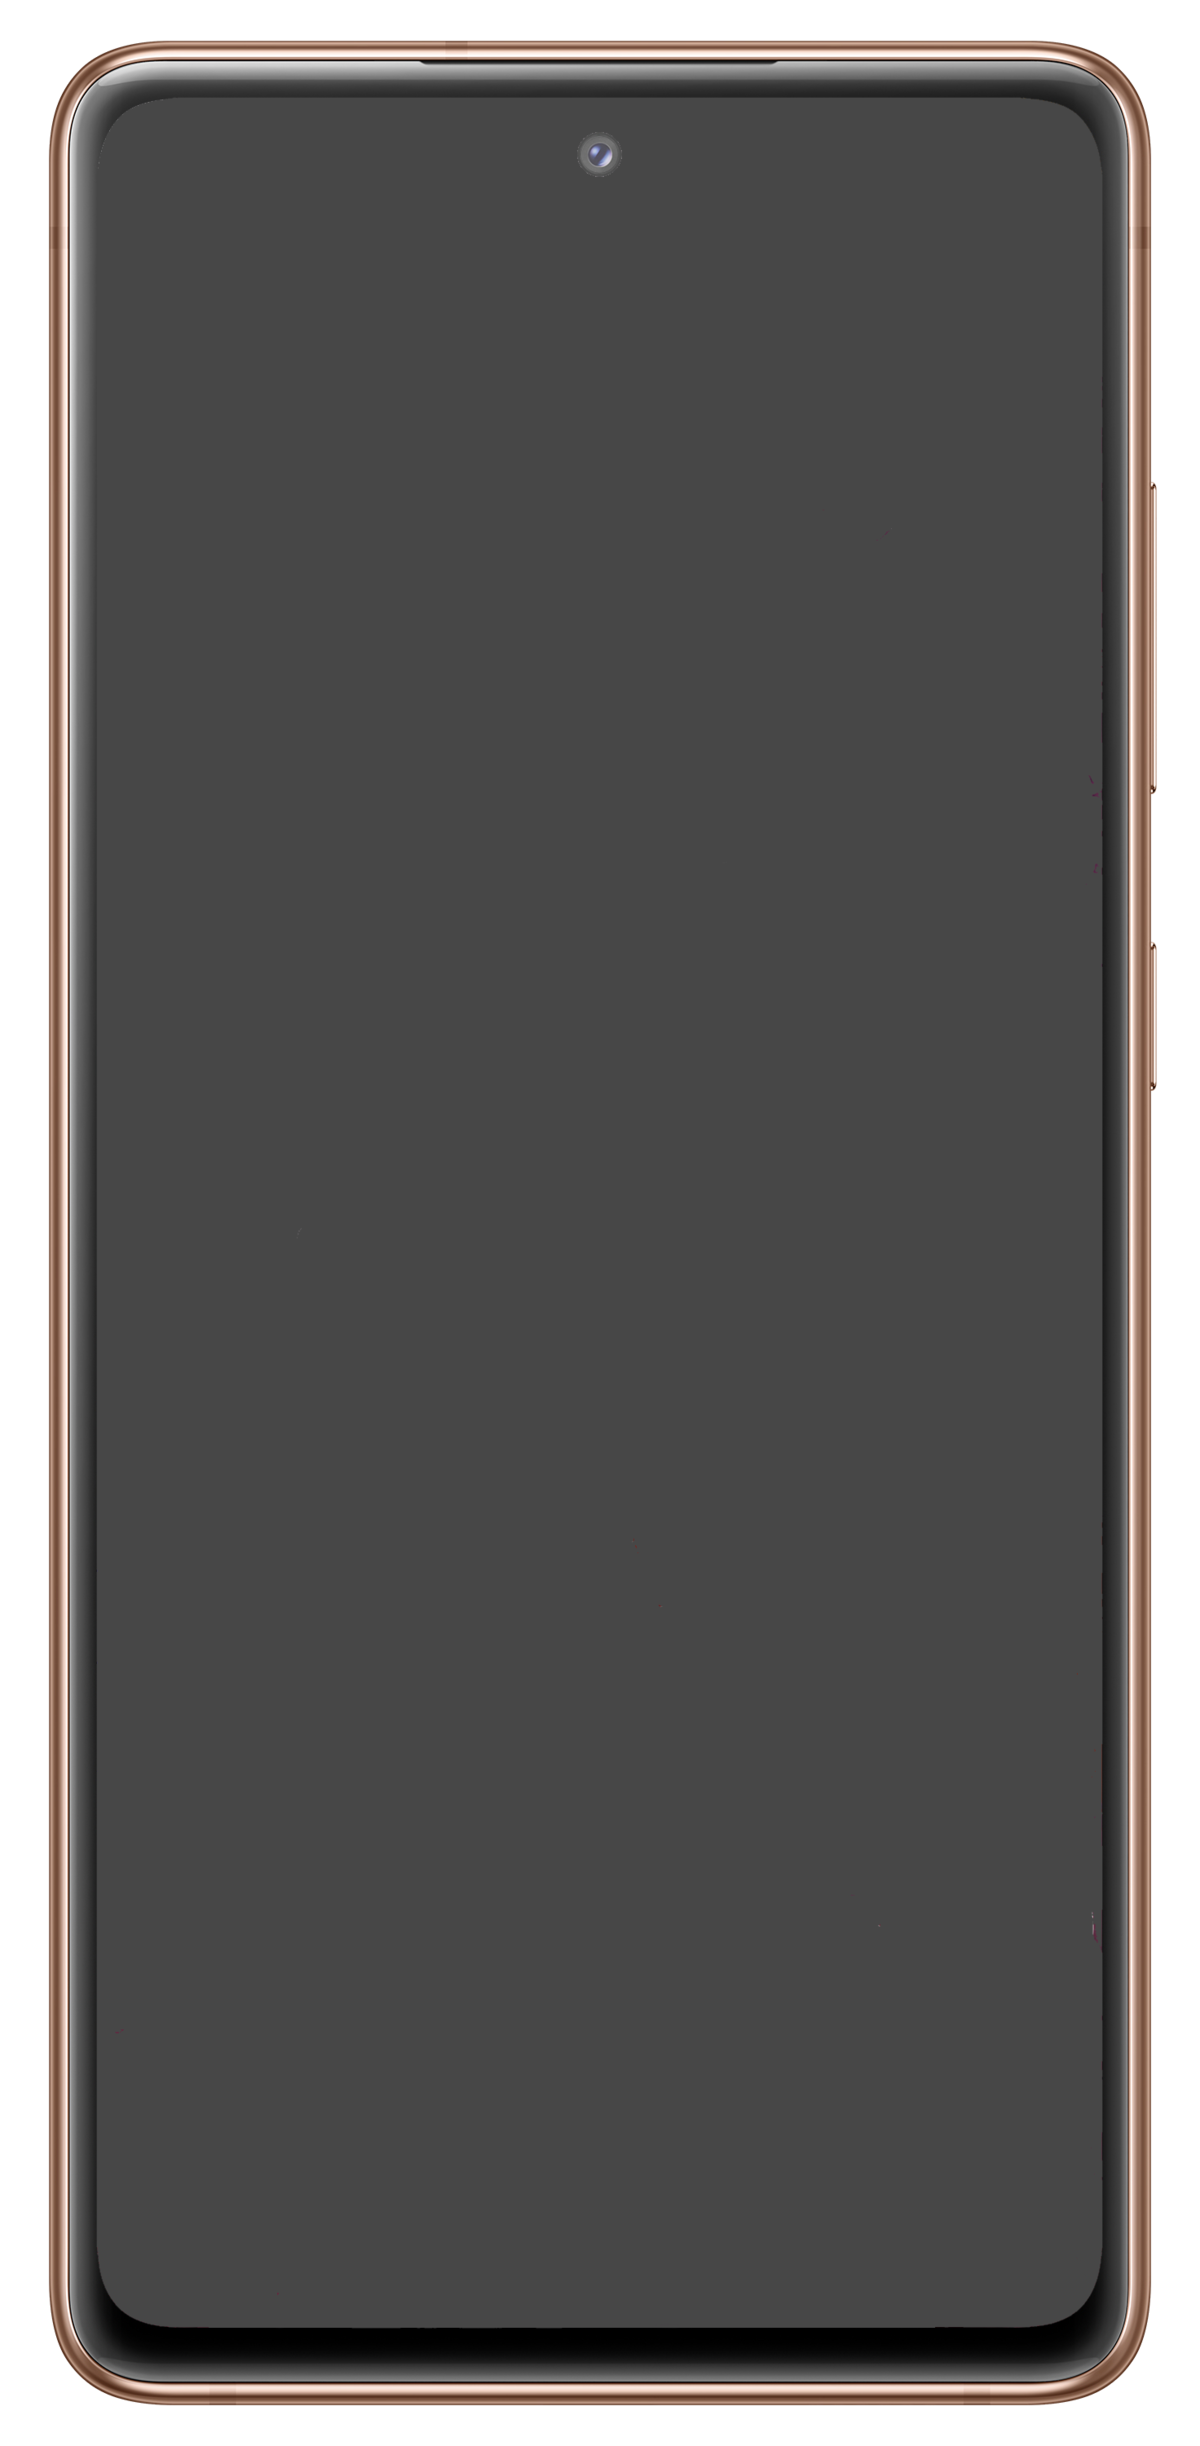 Samsung Galaxy S20 FE - Wikipedia